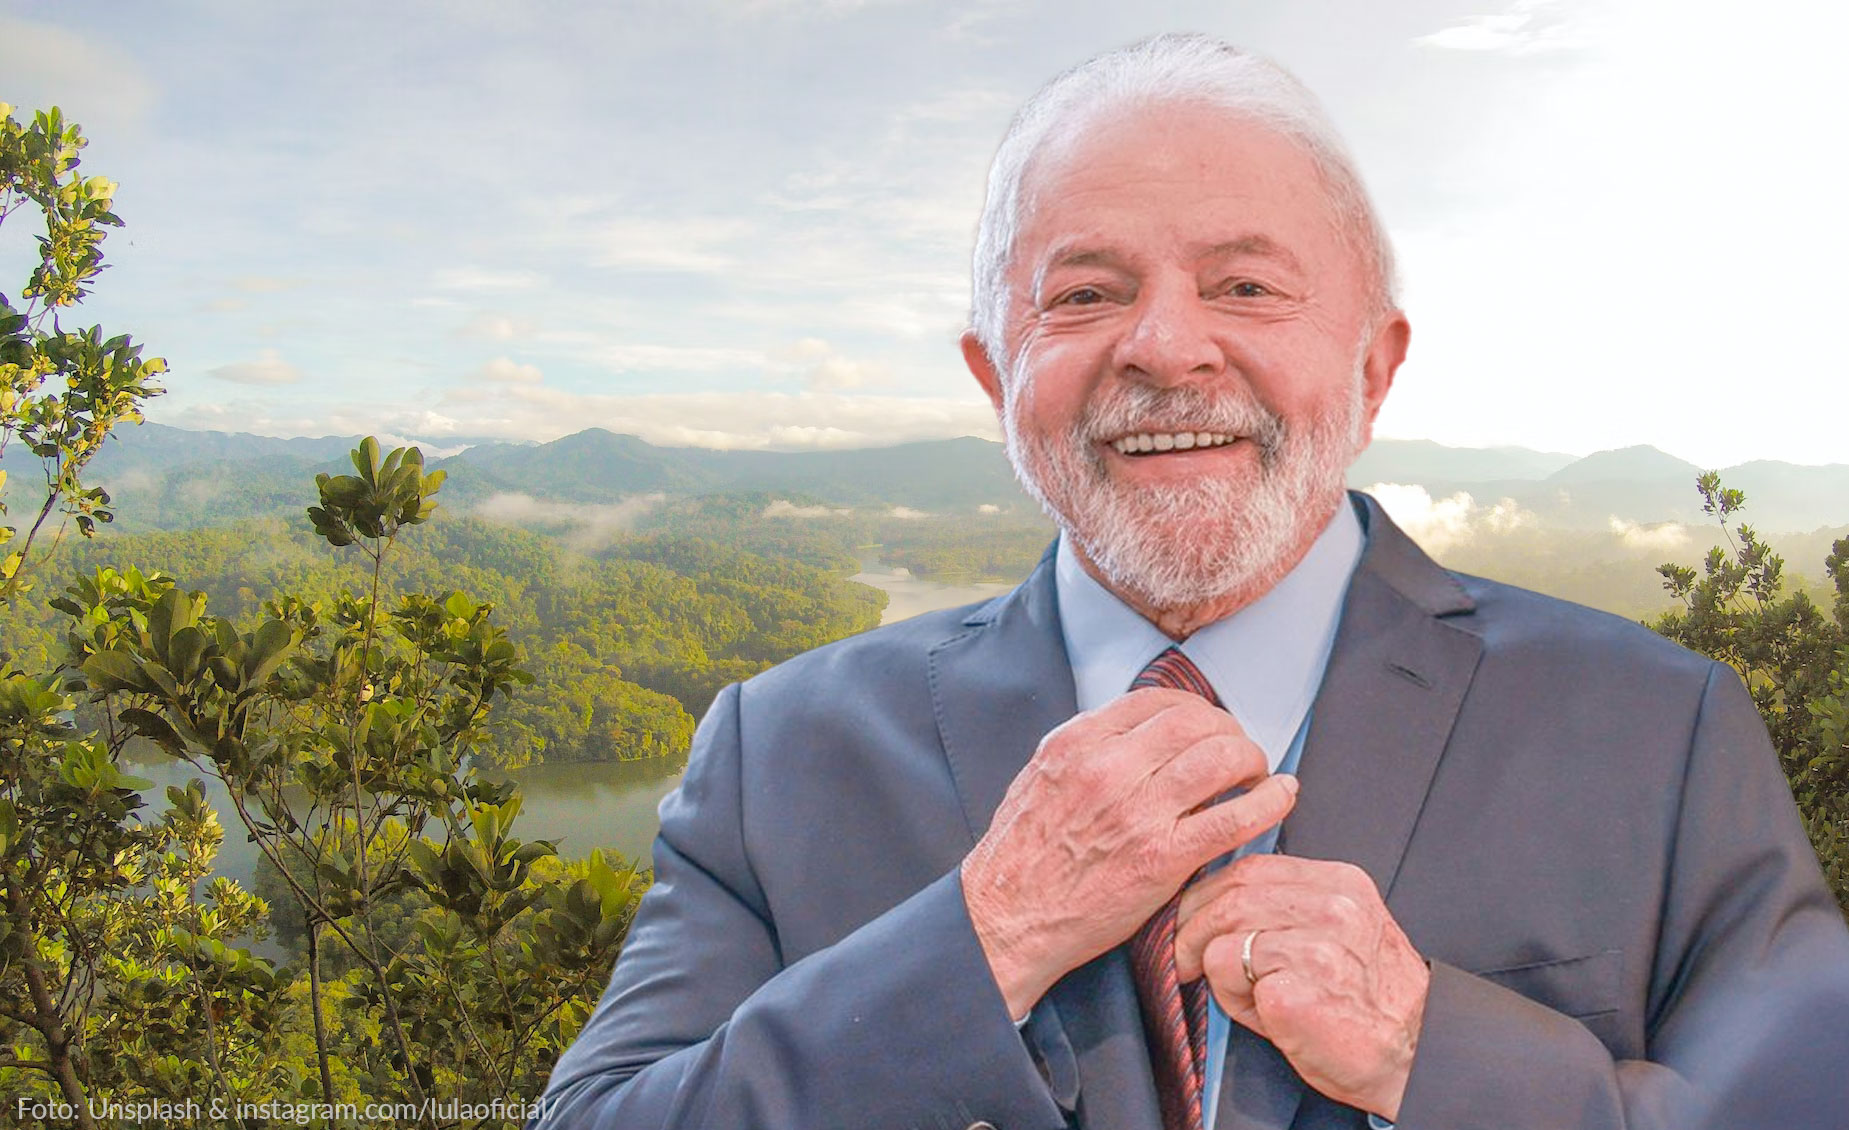 Lula da Silva keeps his promise: Amazon deforestation reduced by 64%